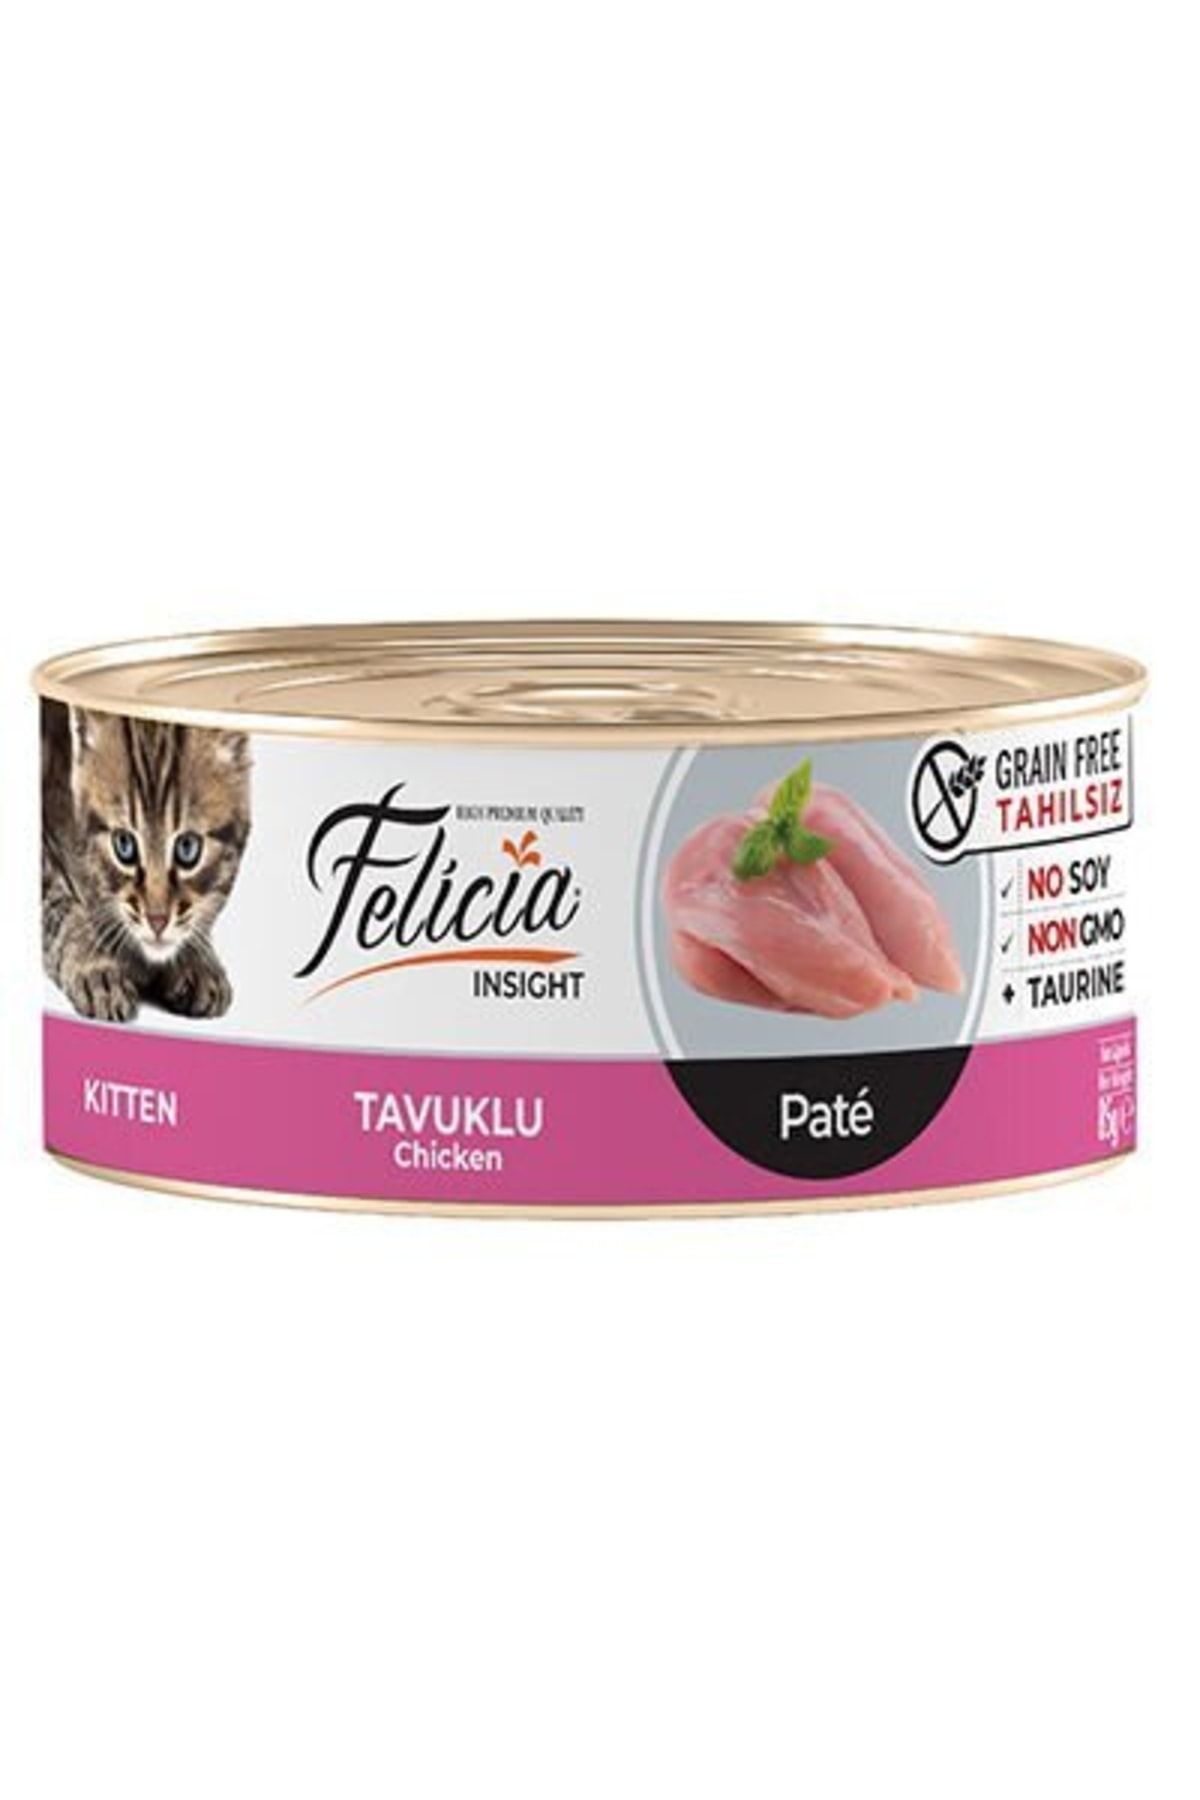 Felicia Tahılsız Tavuklu Kıyılmış Yavru Kedi Konservesi 85 Gr - Farmapets